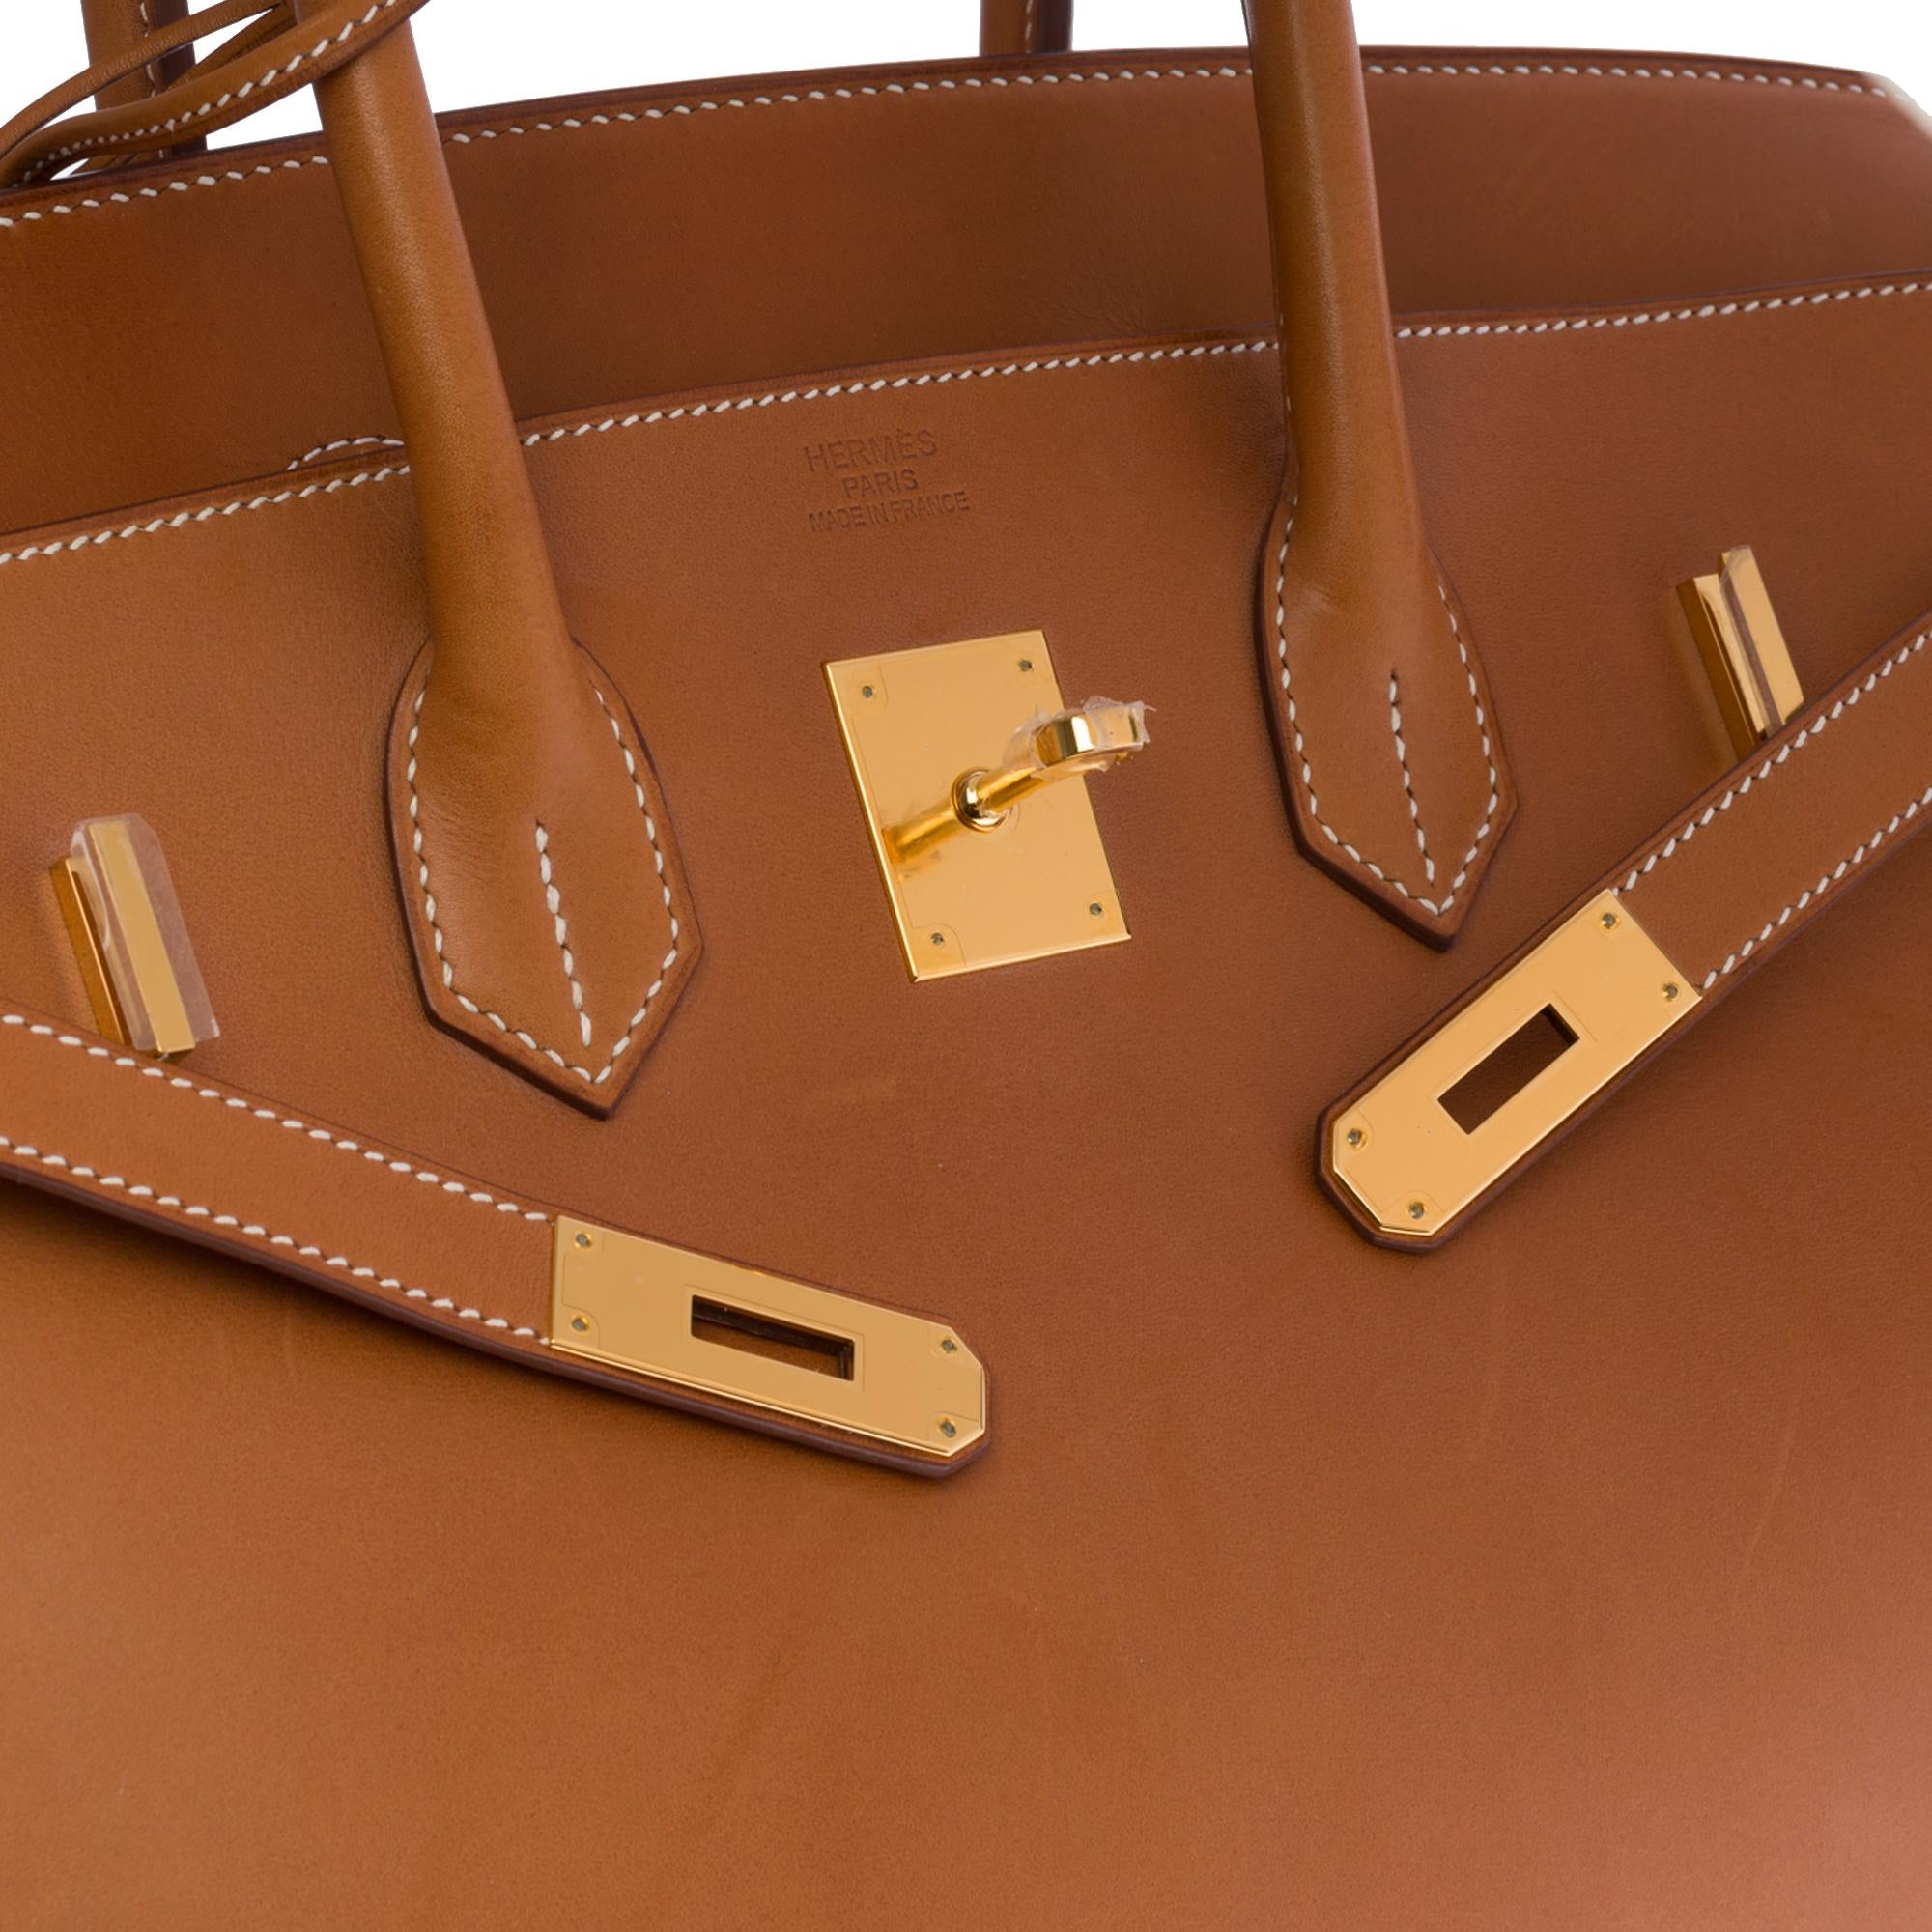 Women's NEW - ULTRA RARE- Hermès Birkin 35 handbag in Gold Barenia leather, GHW